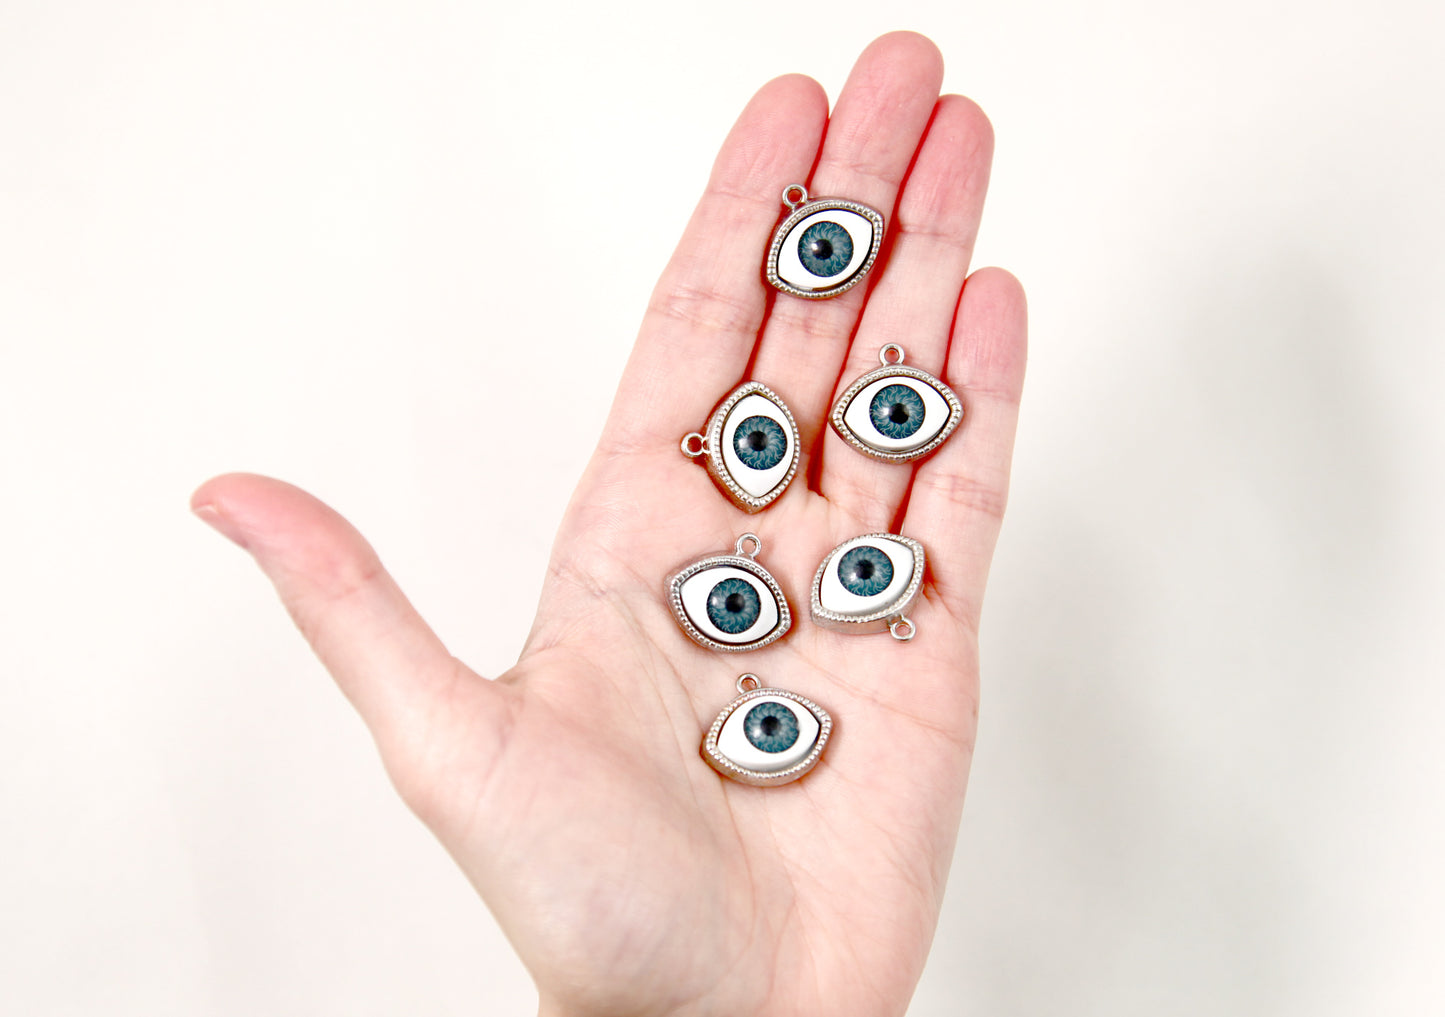 Eyeball Charms - 5 pc set - 22mm Small Eyeball Eye Silver Color Steel Blue Iris Charms or Pendants - easy to make into earrings